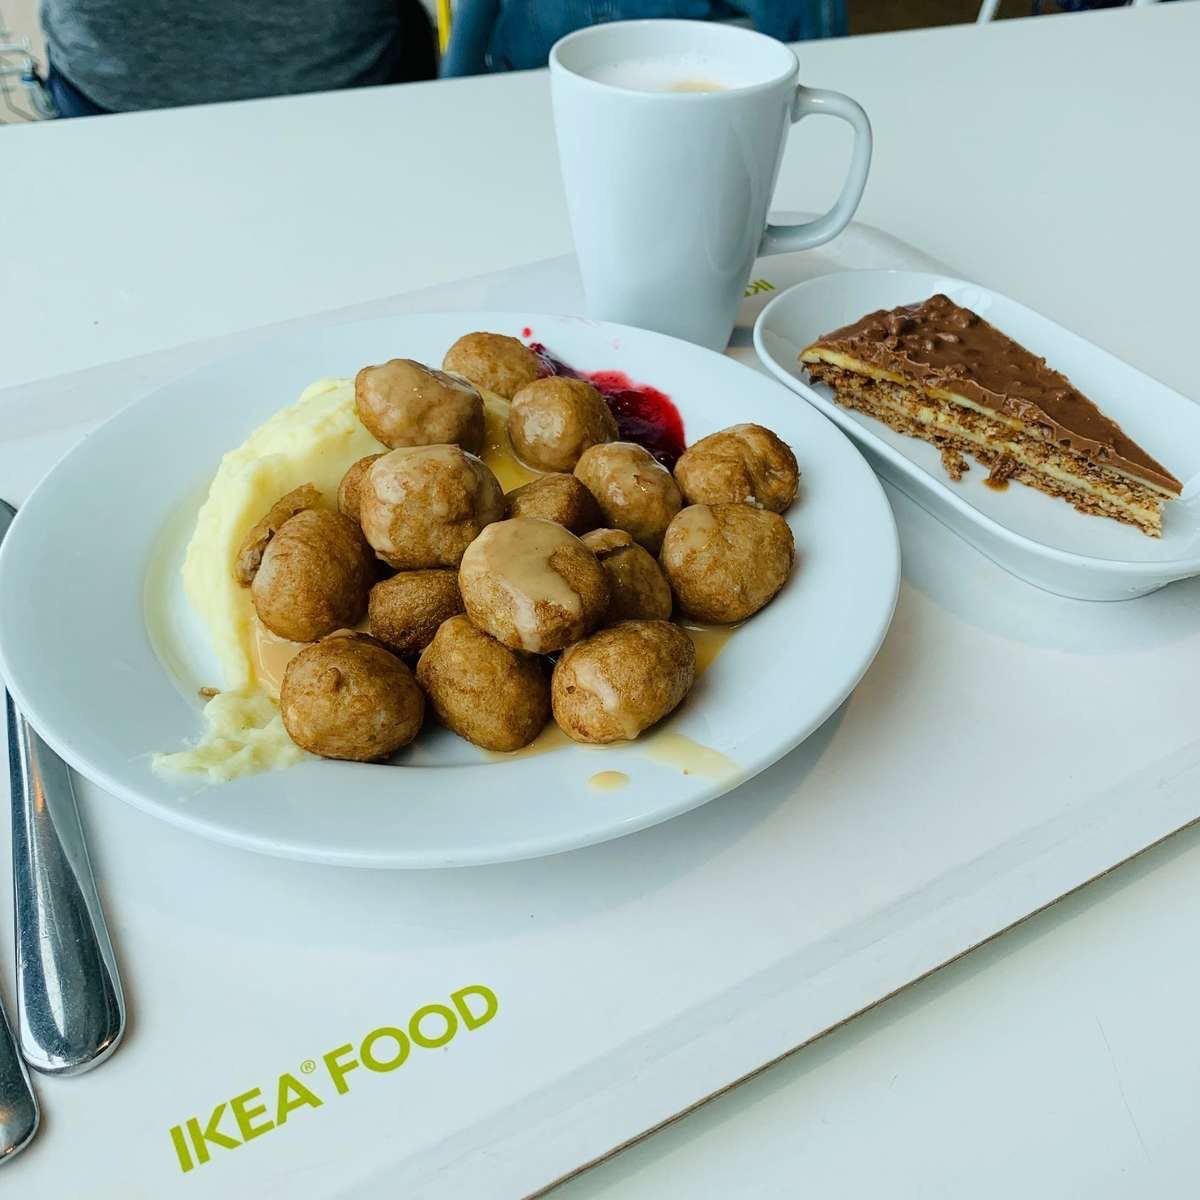 IKEA Restaurant  Caf - Tempe - Food Delivery Shop